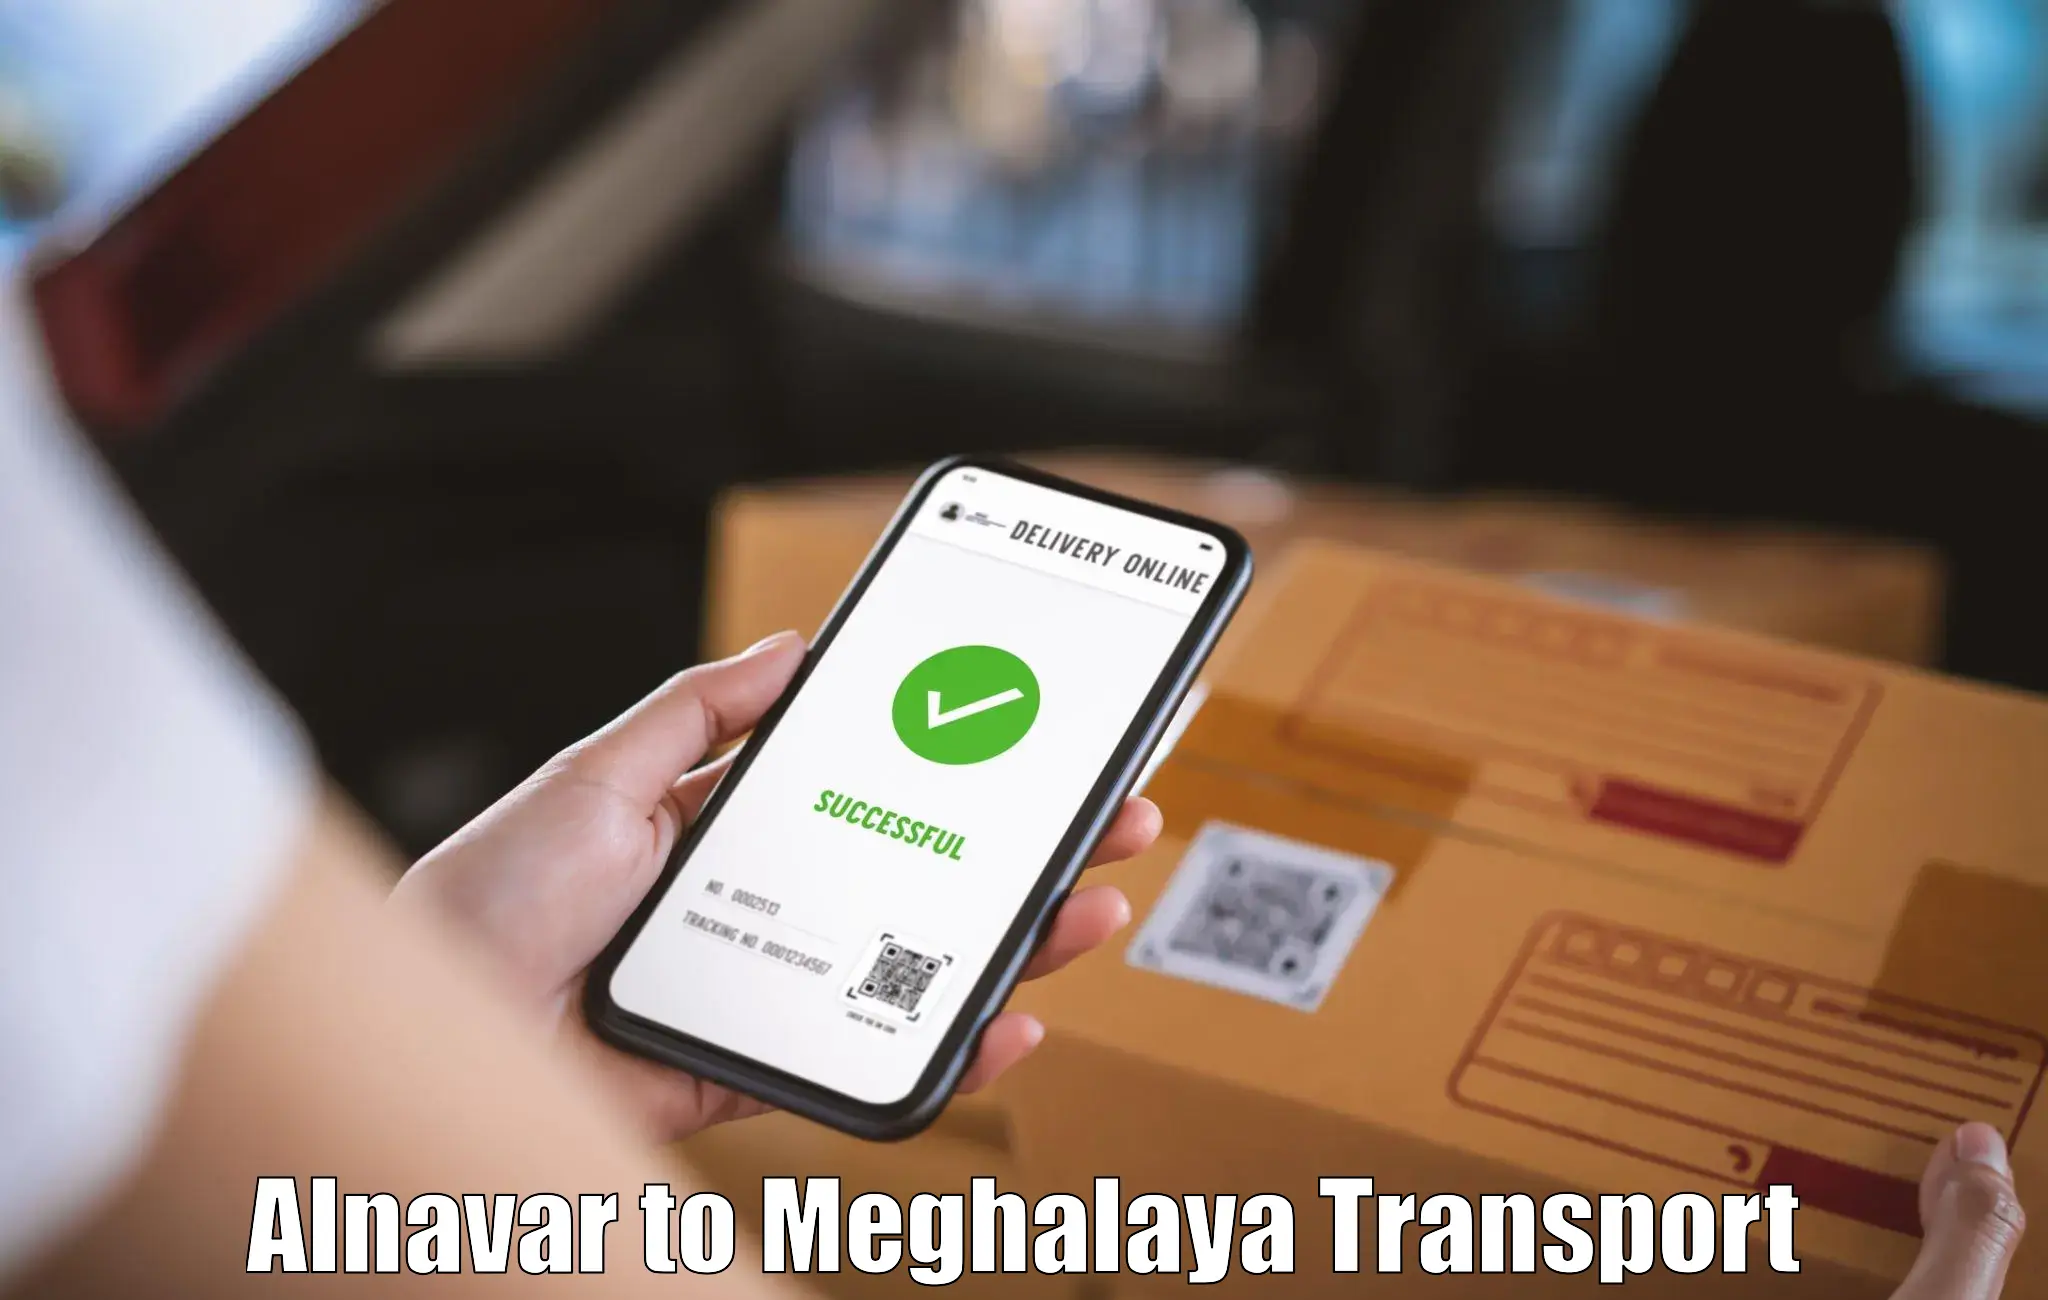 Bike transport service Alnavar to Meghalaya